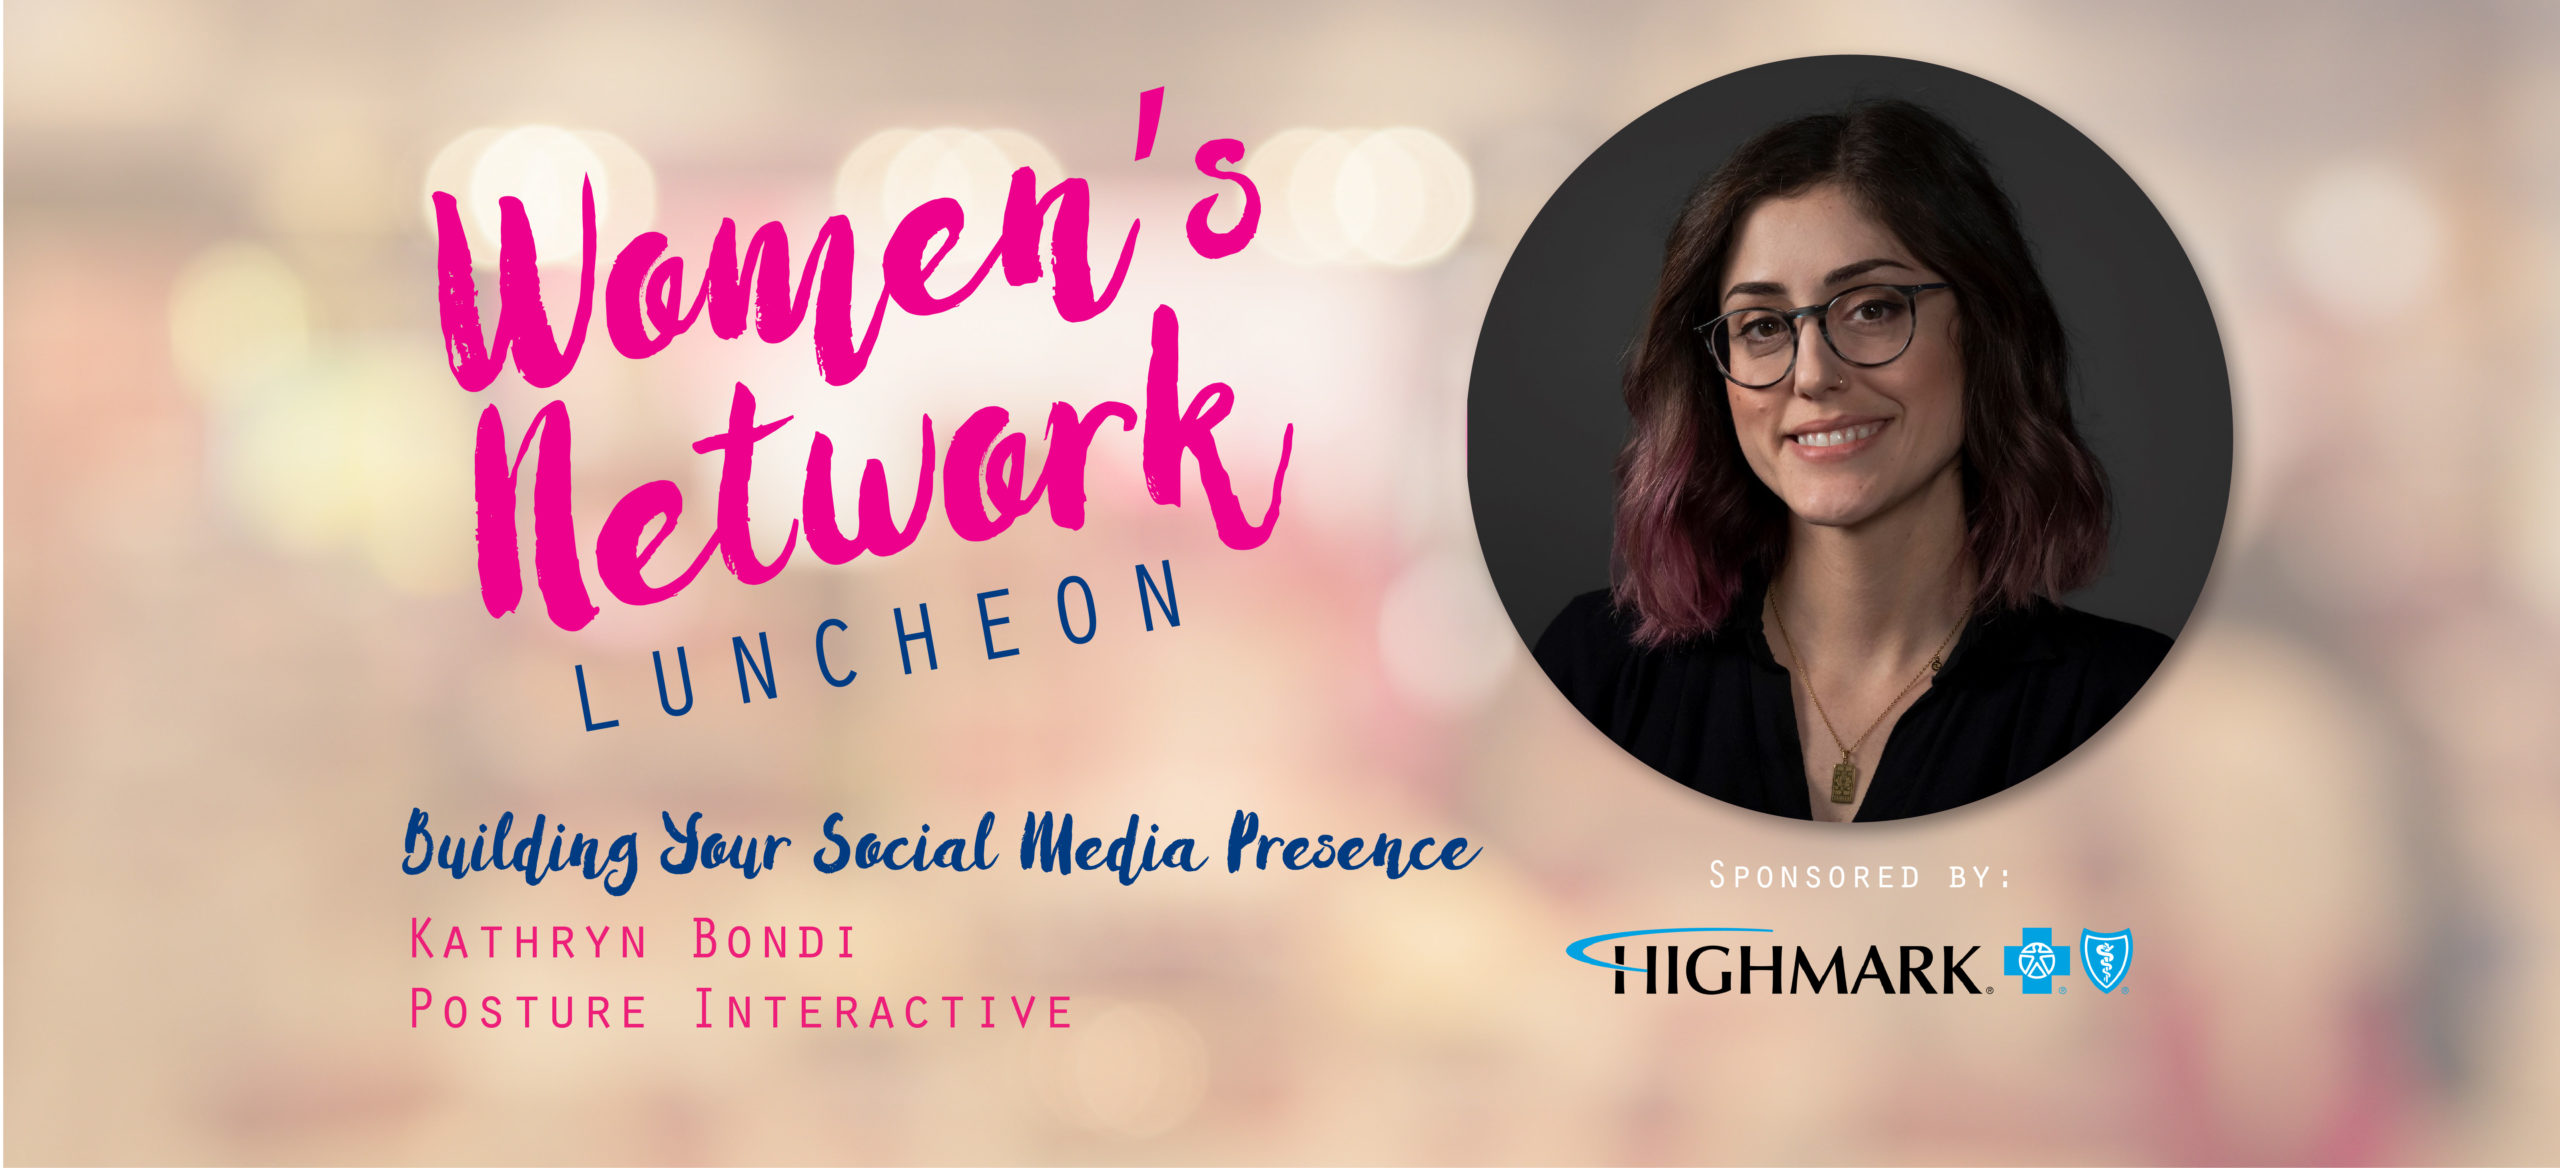 Women’s Network Luncheon: Building Your Social Media Presence